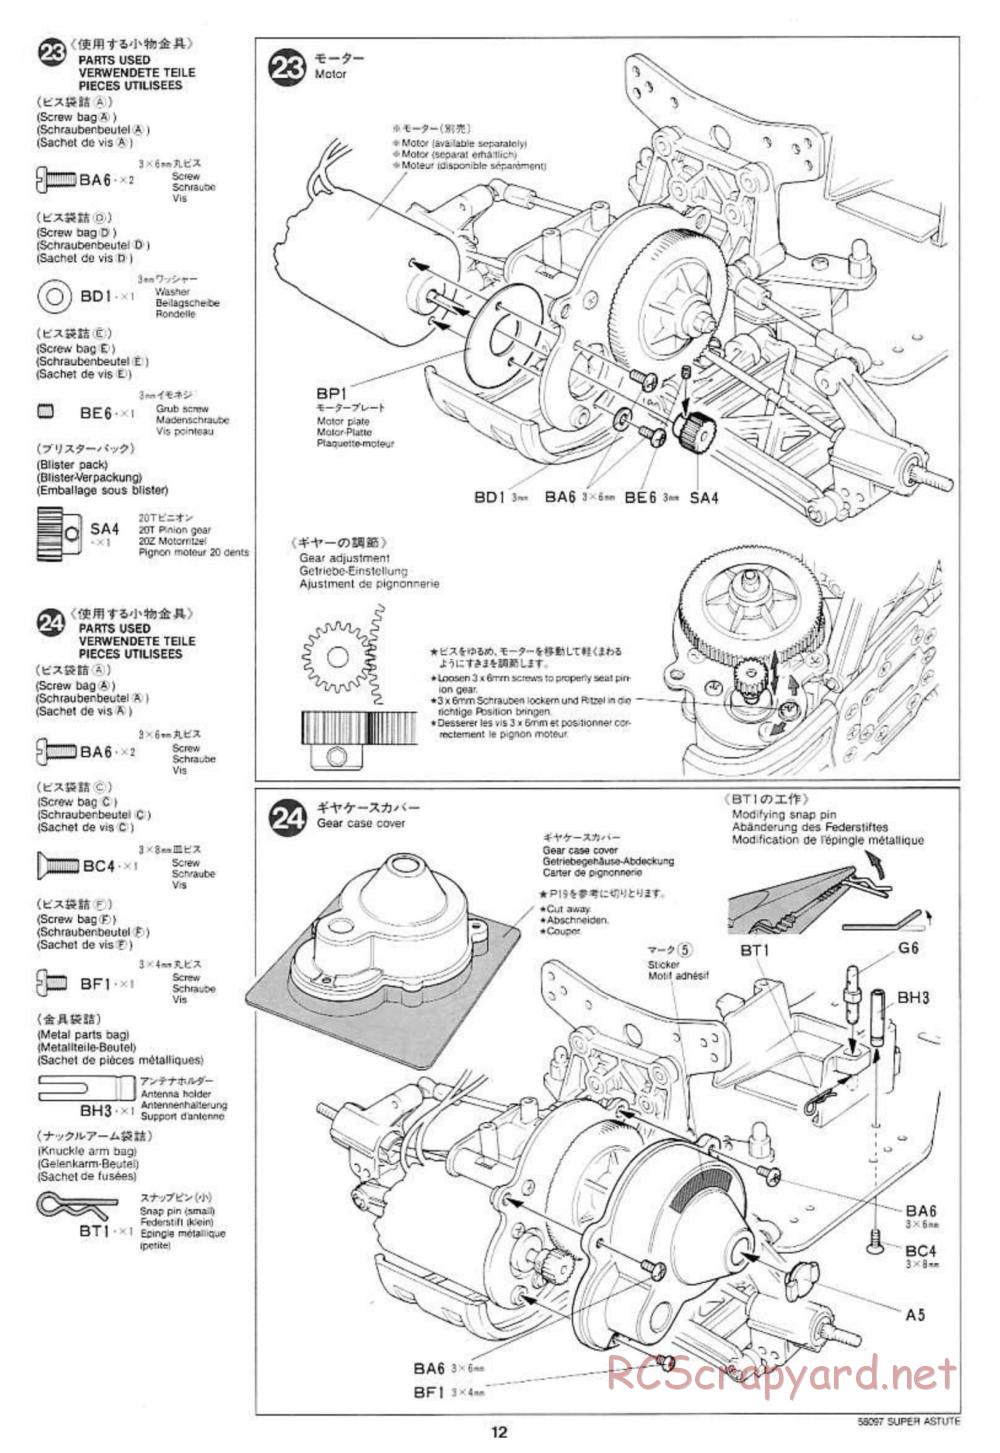 Tamiya - Super Astute - 58097 - Manual - Page 12